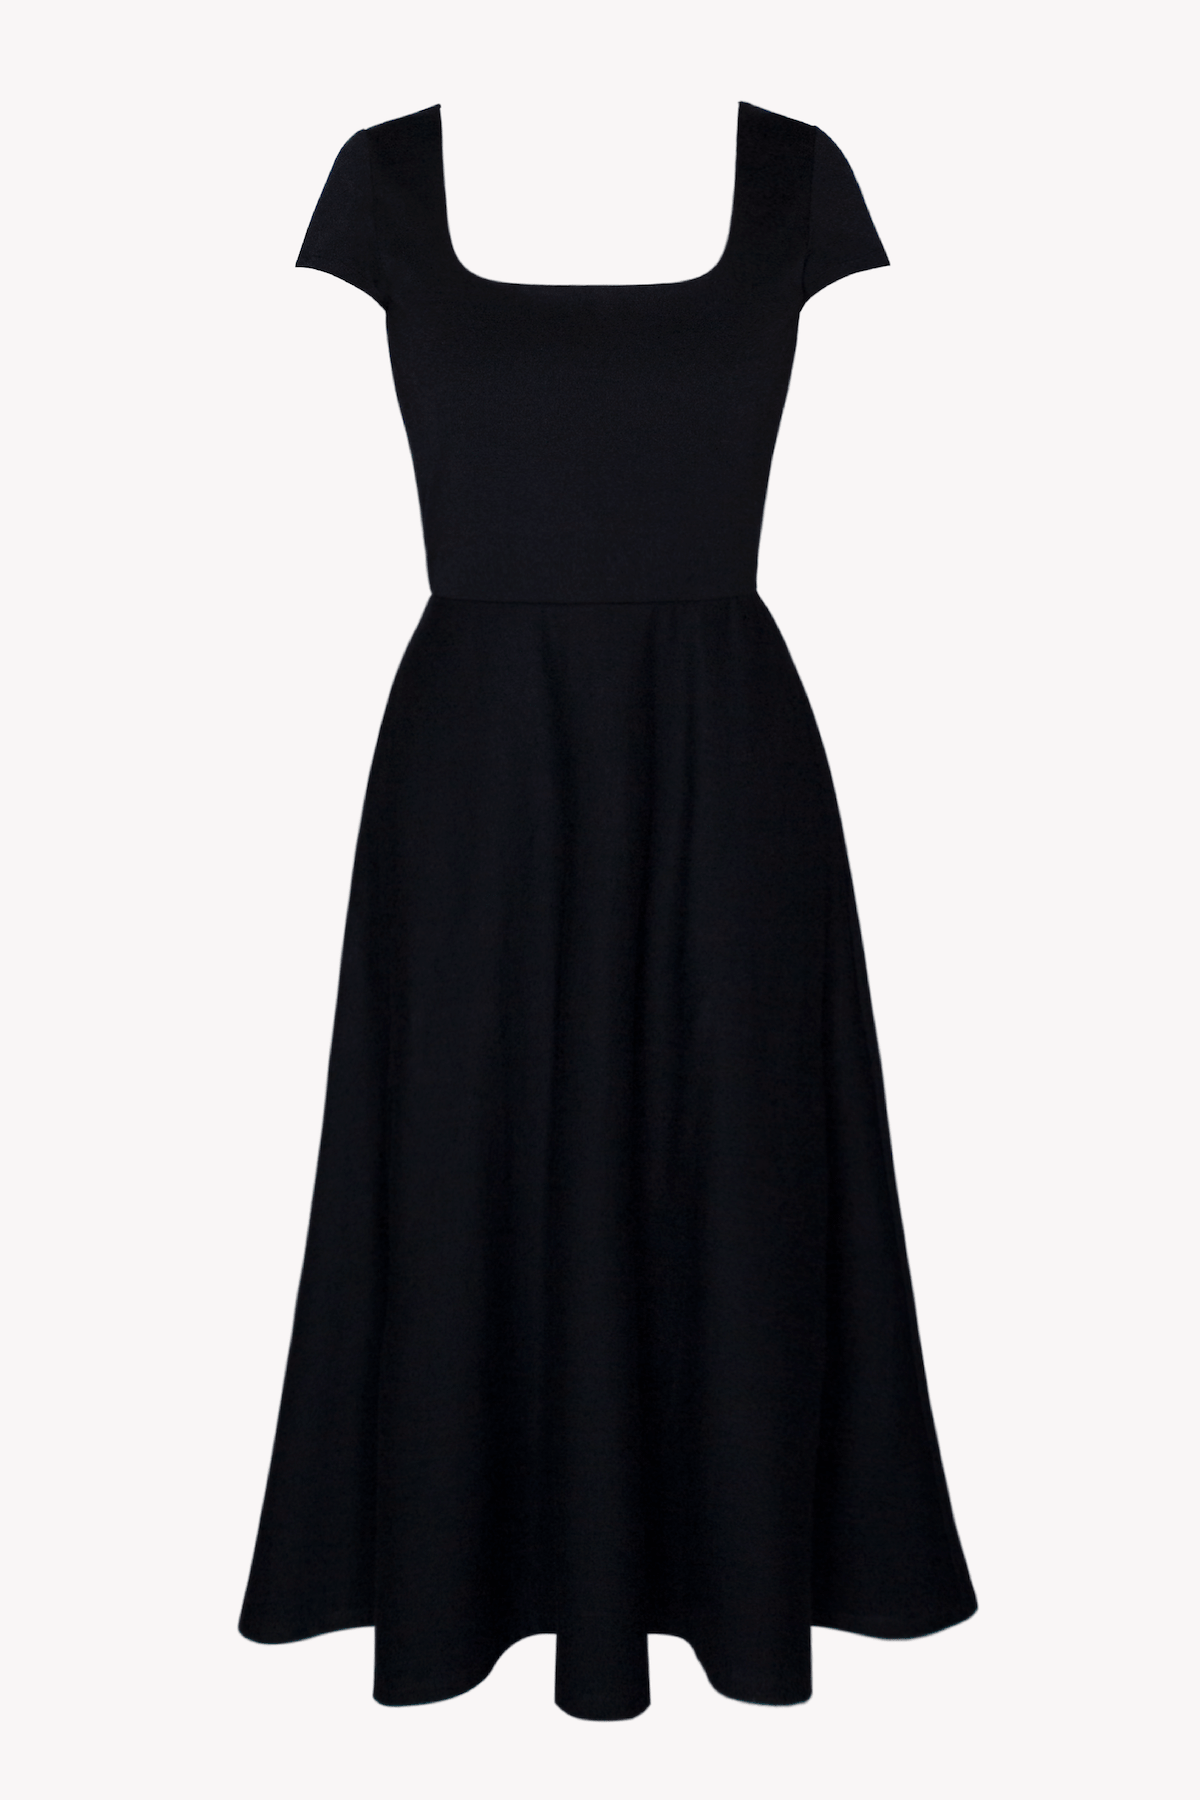 Black BCI Cotton Square Neck A-Line Mid-Calf Dress